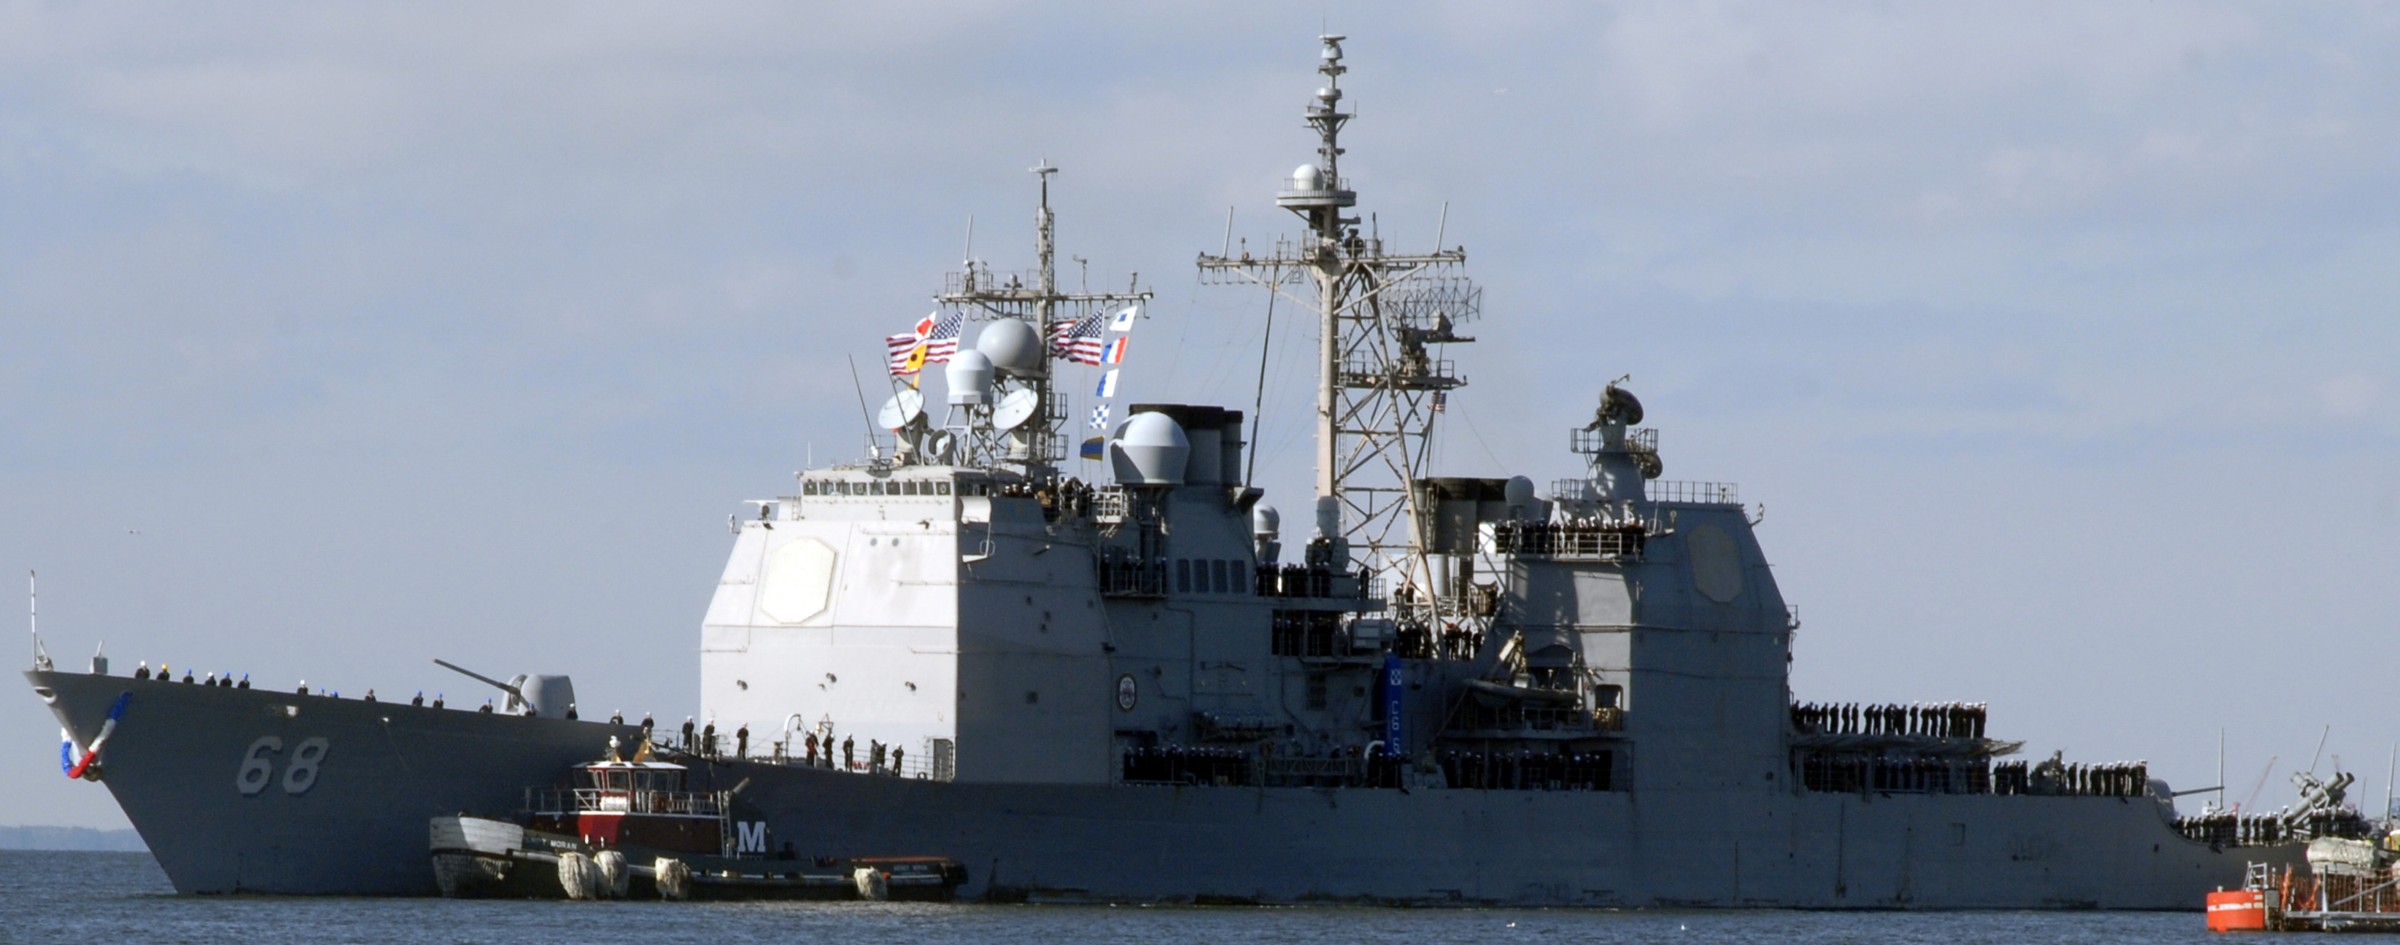 cg-68 uss anzio ticonderoga class guided missile cruiser aegis us navy returning naval station norfolk 31